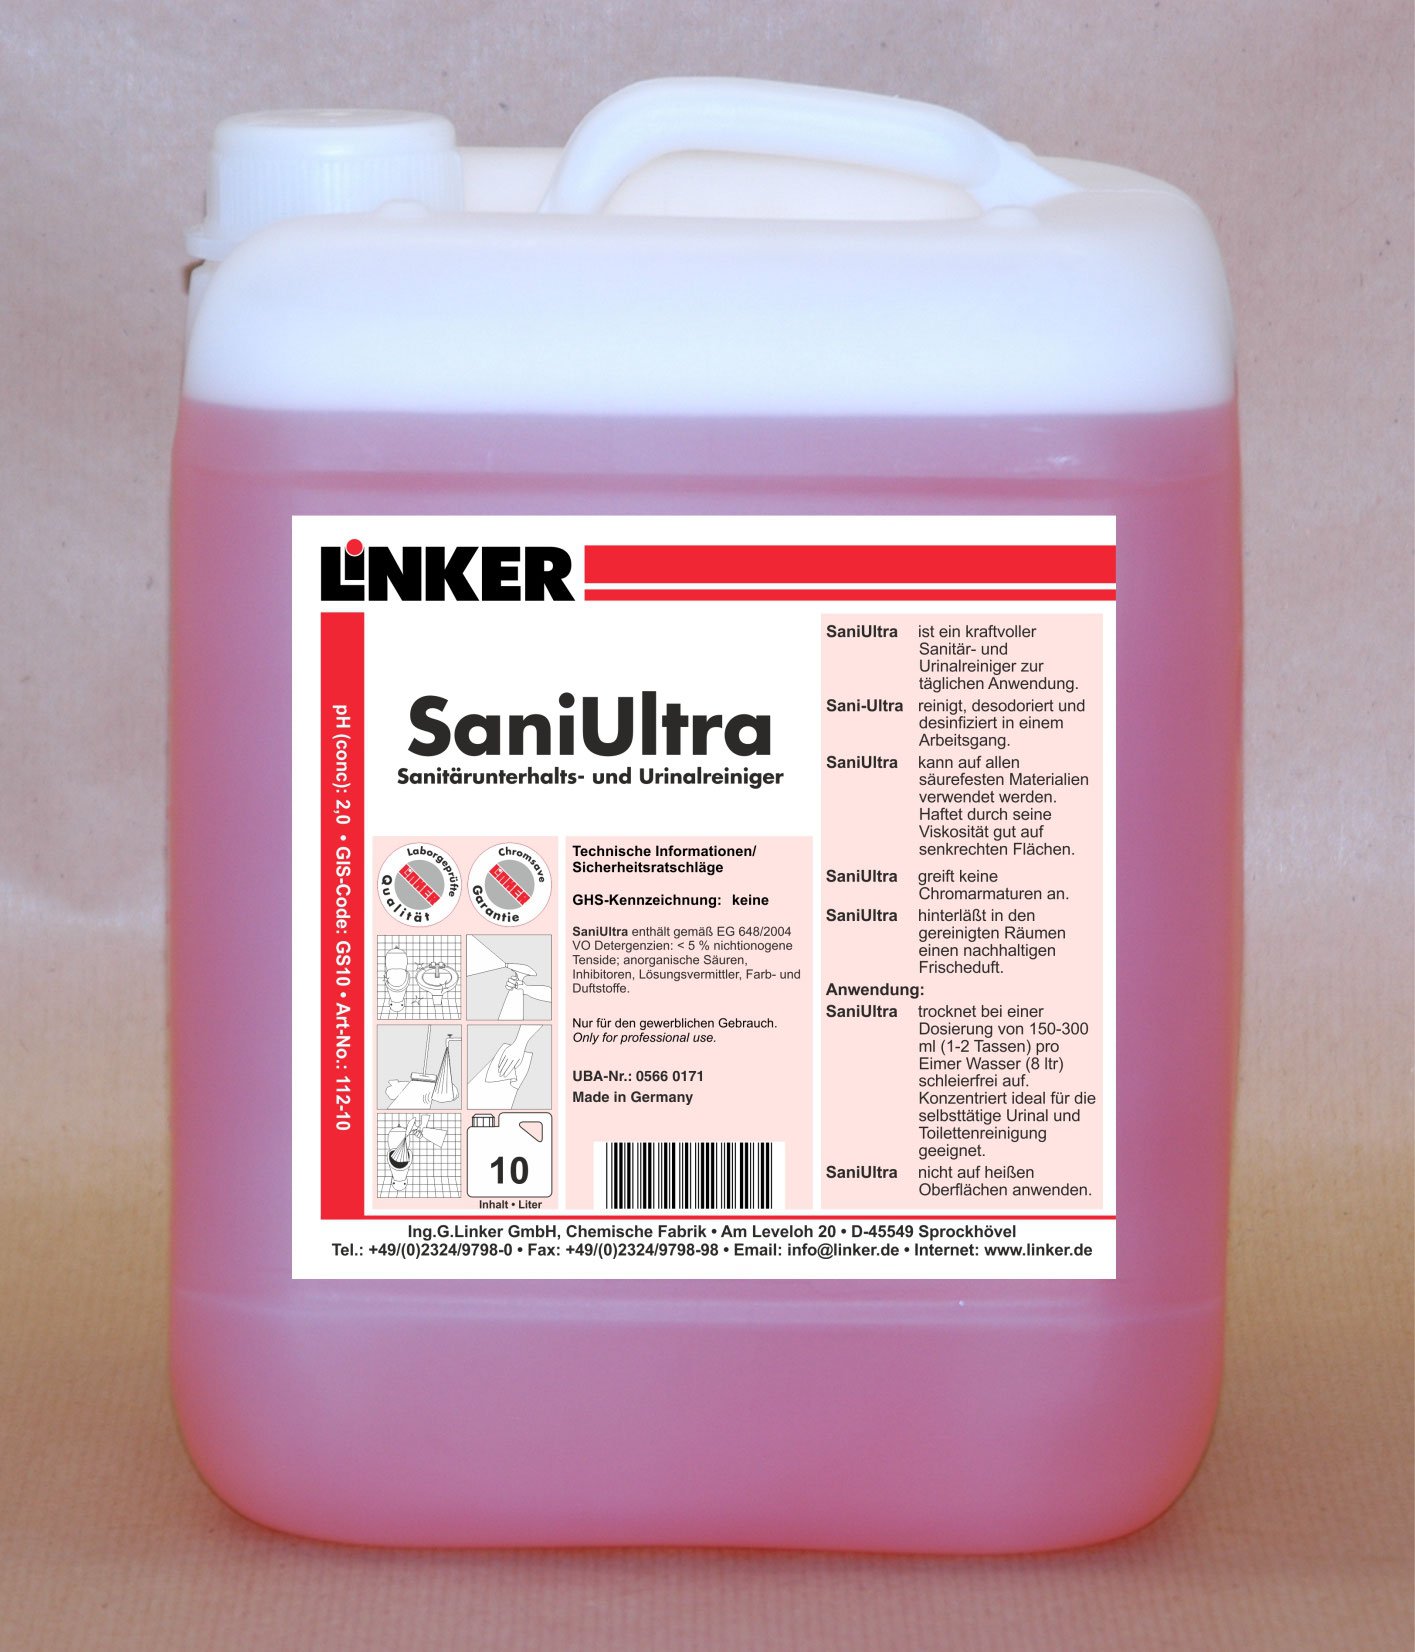 Linker Chemie SaniUltra Sanitär Bad Reiniger VE 10,1 Liter Kanister | Reiniger | Hygiene | Reinigungsmittel | Pflegemittel | Pflege | Reinigungschemie |